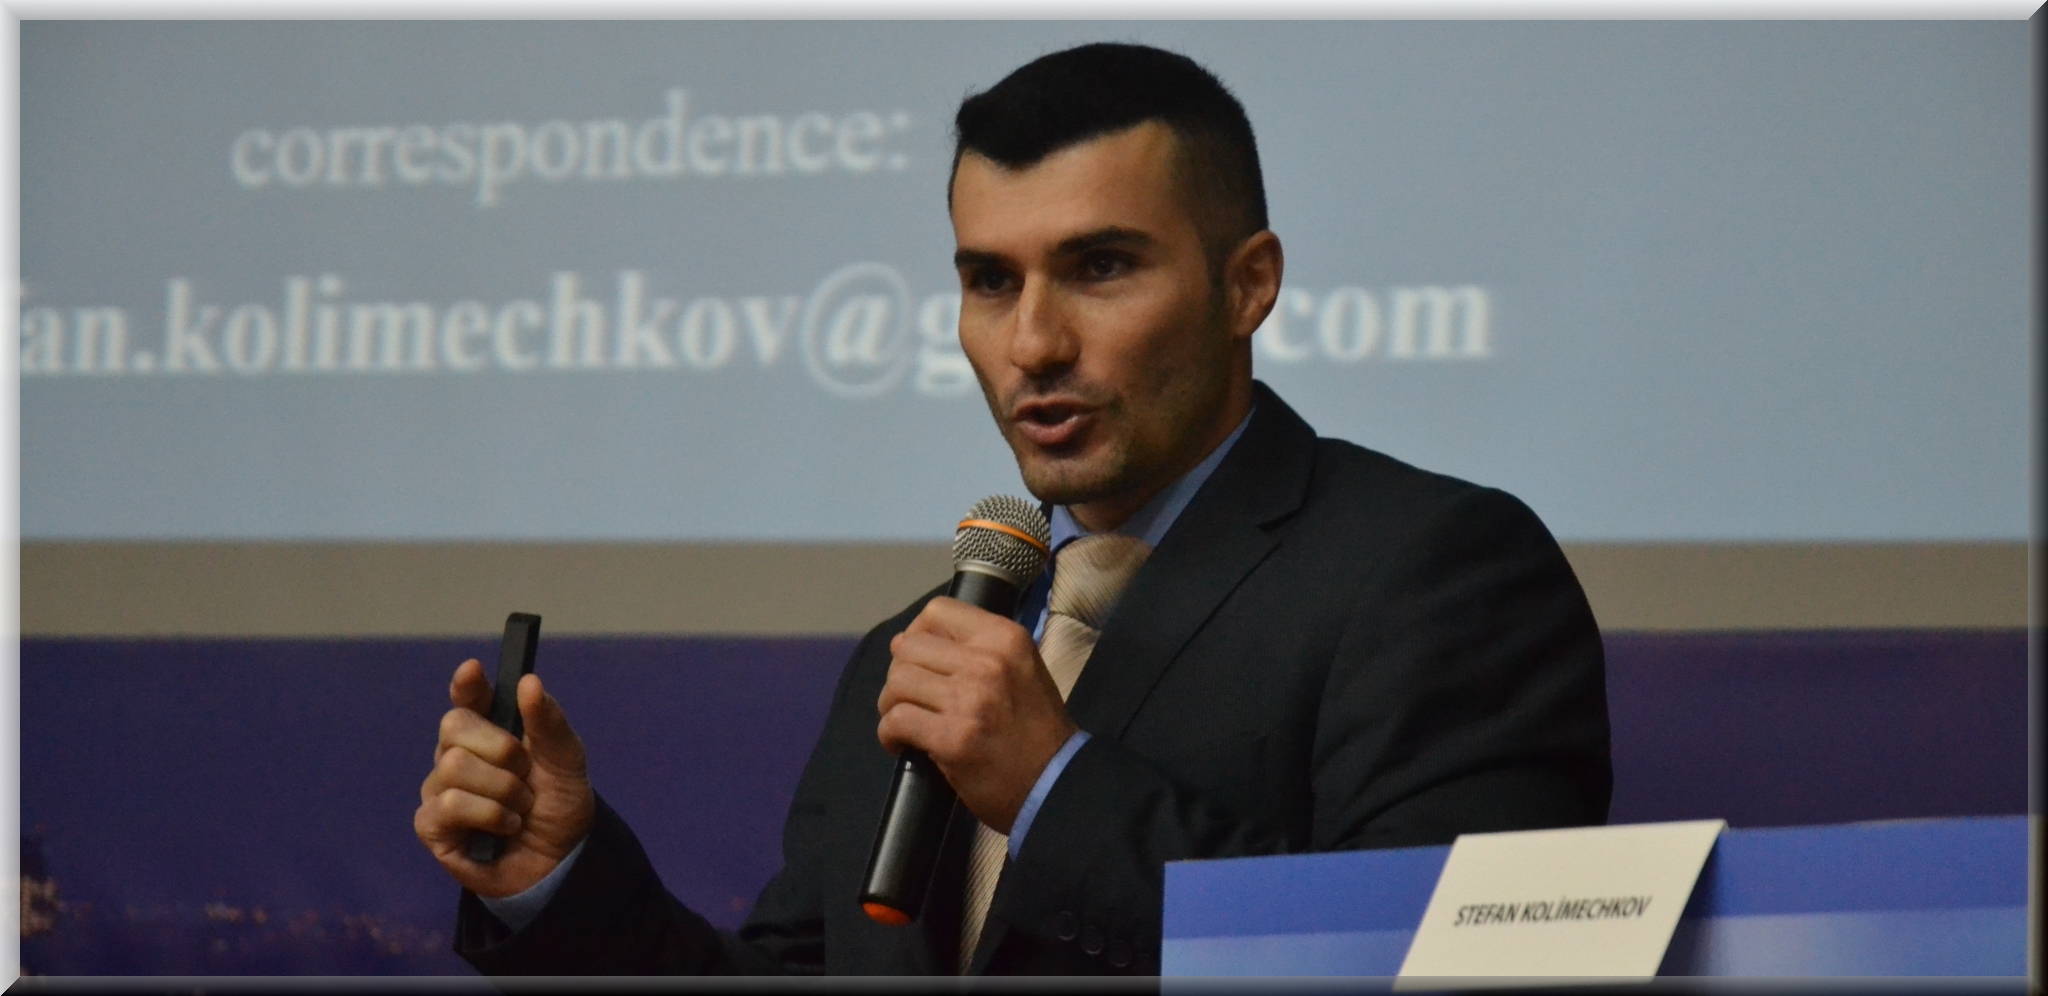 Dr Stefan Kolimechkov presenting at academic conferences in Gymnastics